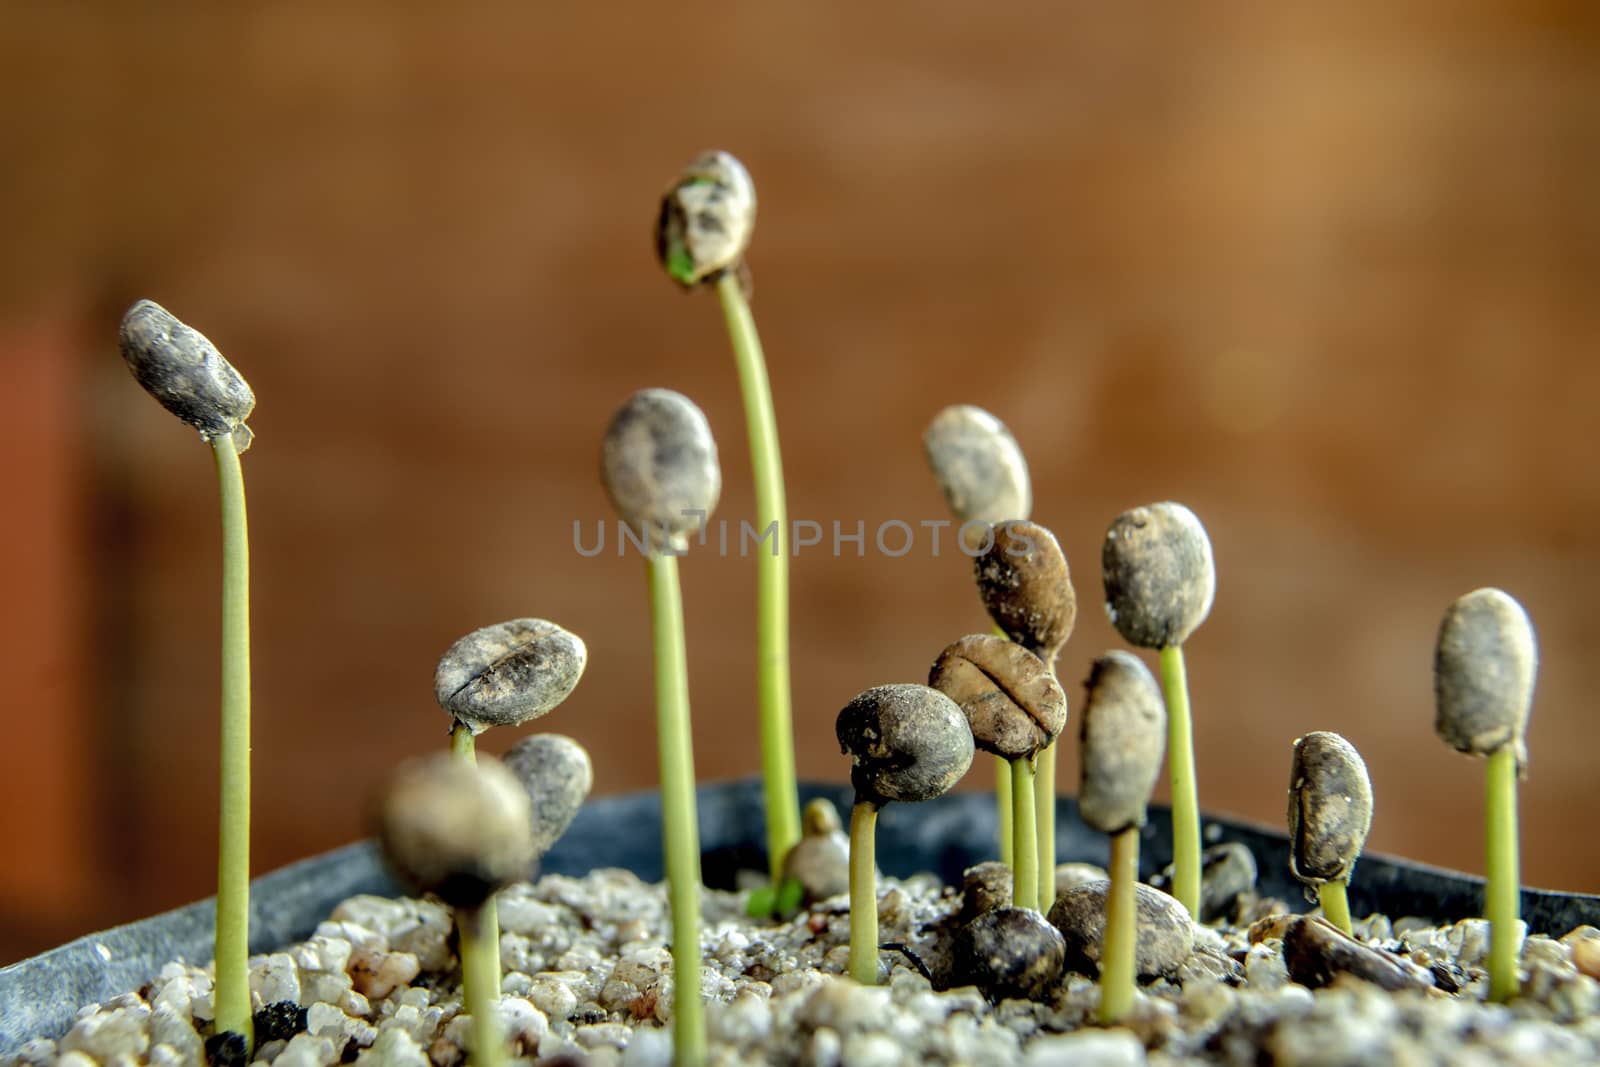 Robusta coffee seedlings In the nursery by Aedka_Stodio